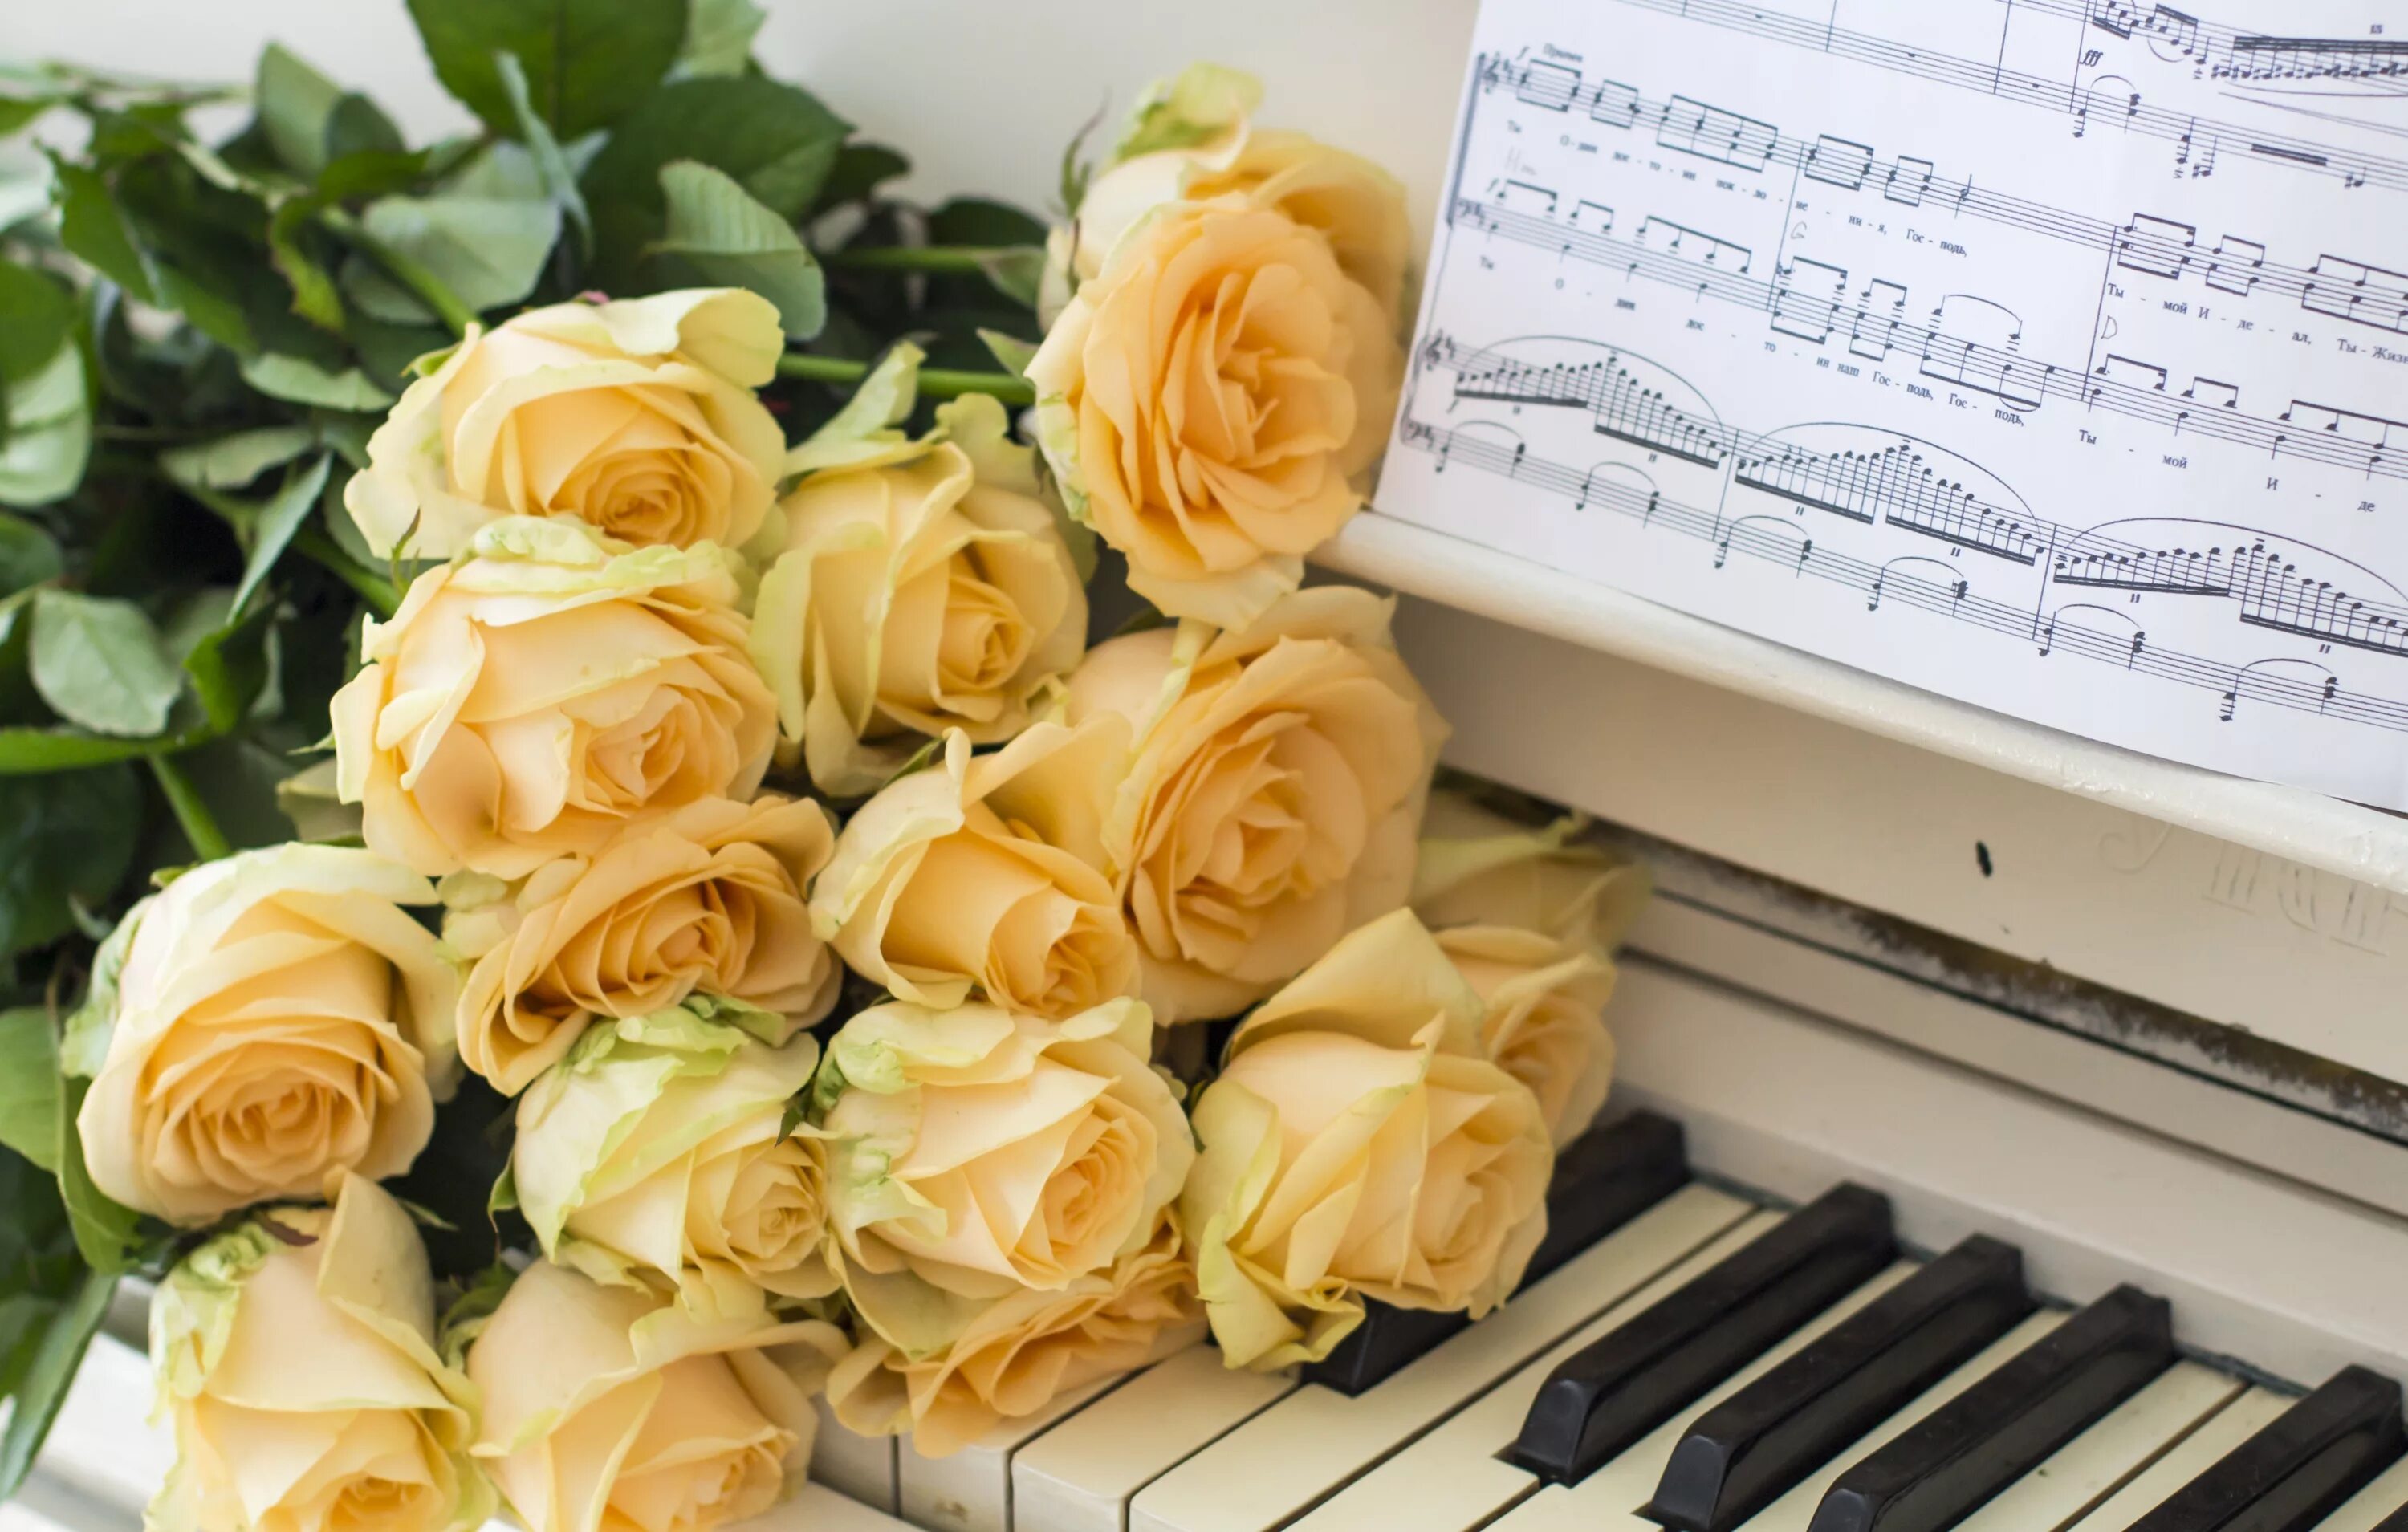 Музыка цветов мп3. Цветы на рояле. Музыкальный букет цветов. Цветы для музыканта. Цветы на пианино.